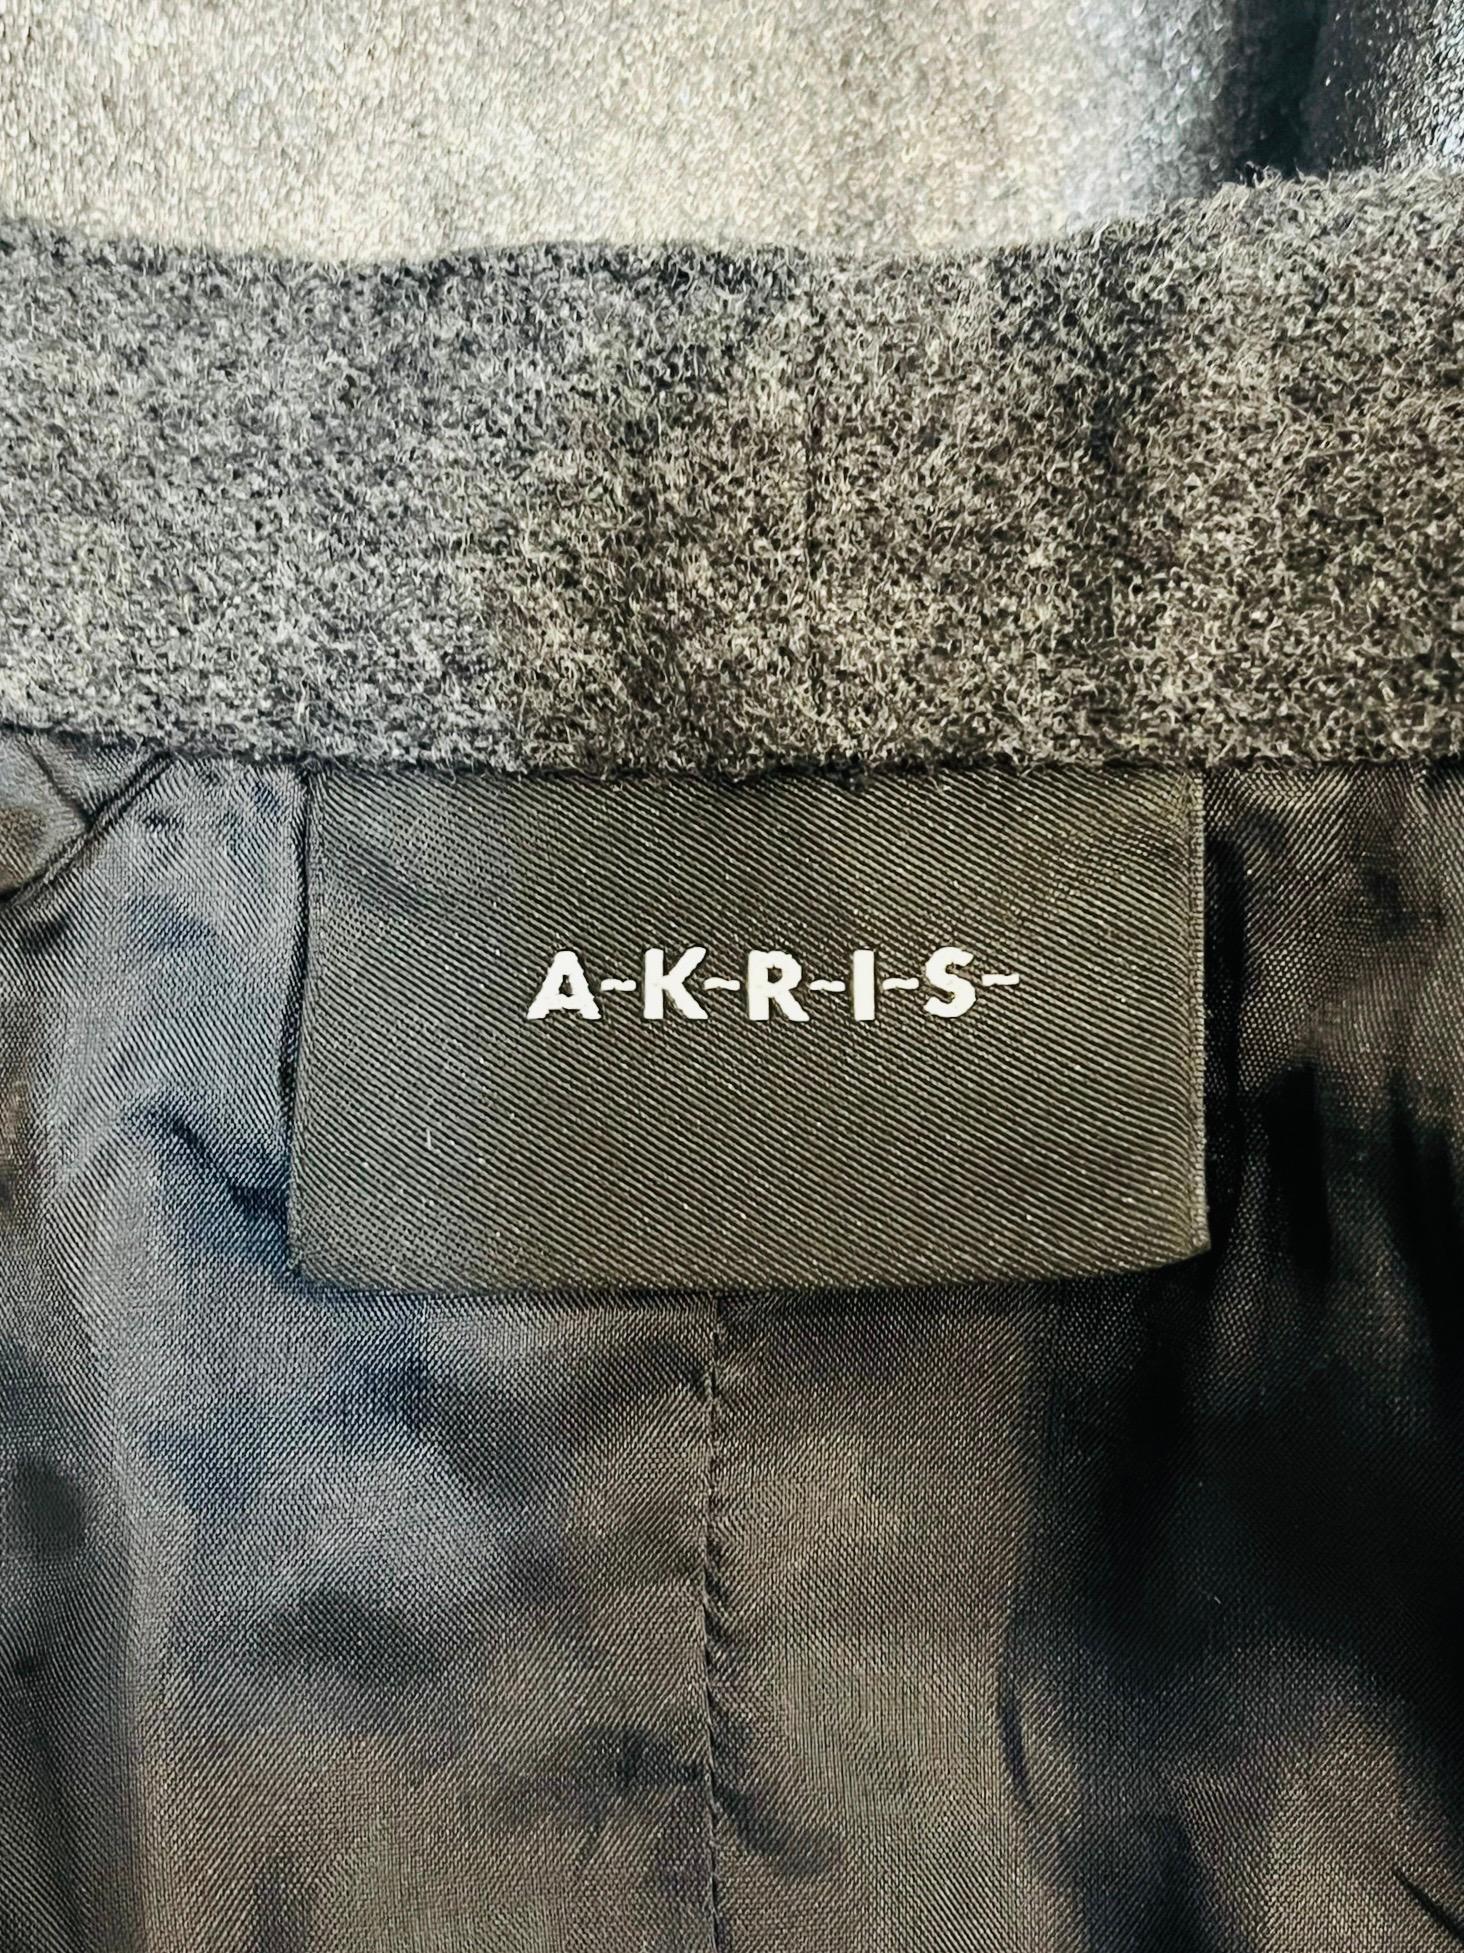 Akris Wool & Leather Open Jacket For Sale 1